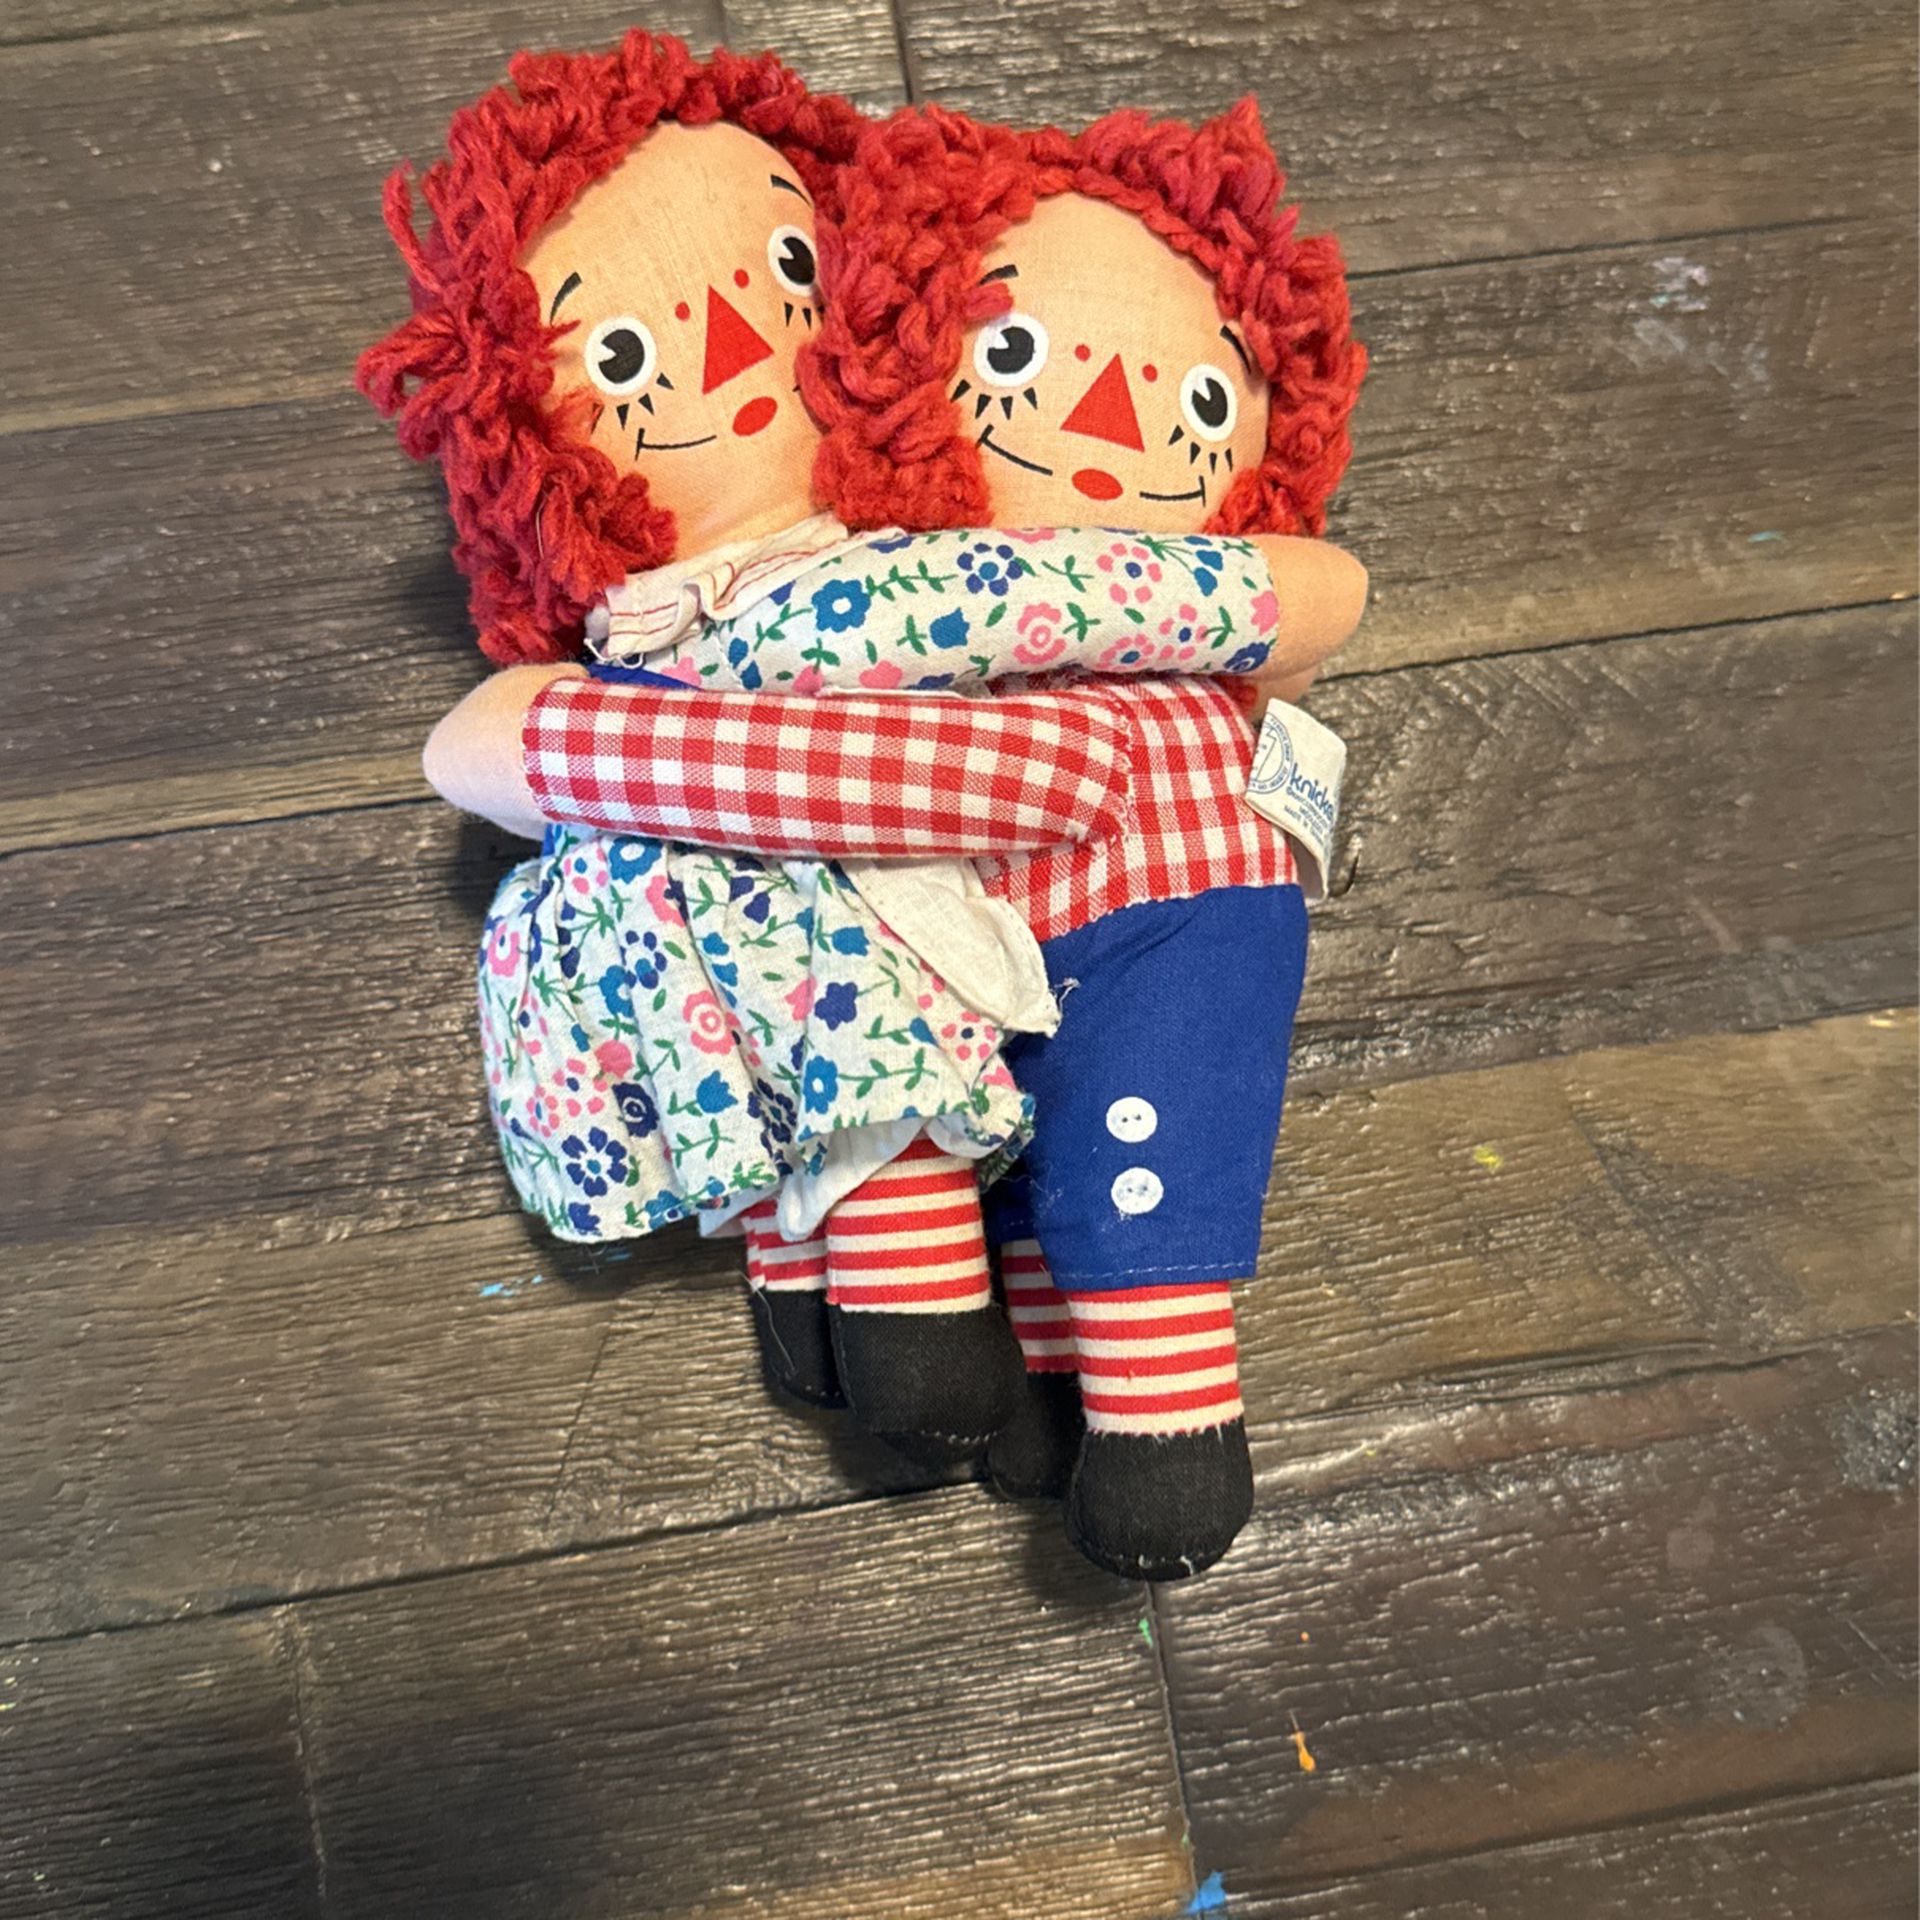 Vintage Hugging Raggedy Ann And Andy 7” Knickerbocker Doll